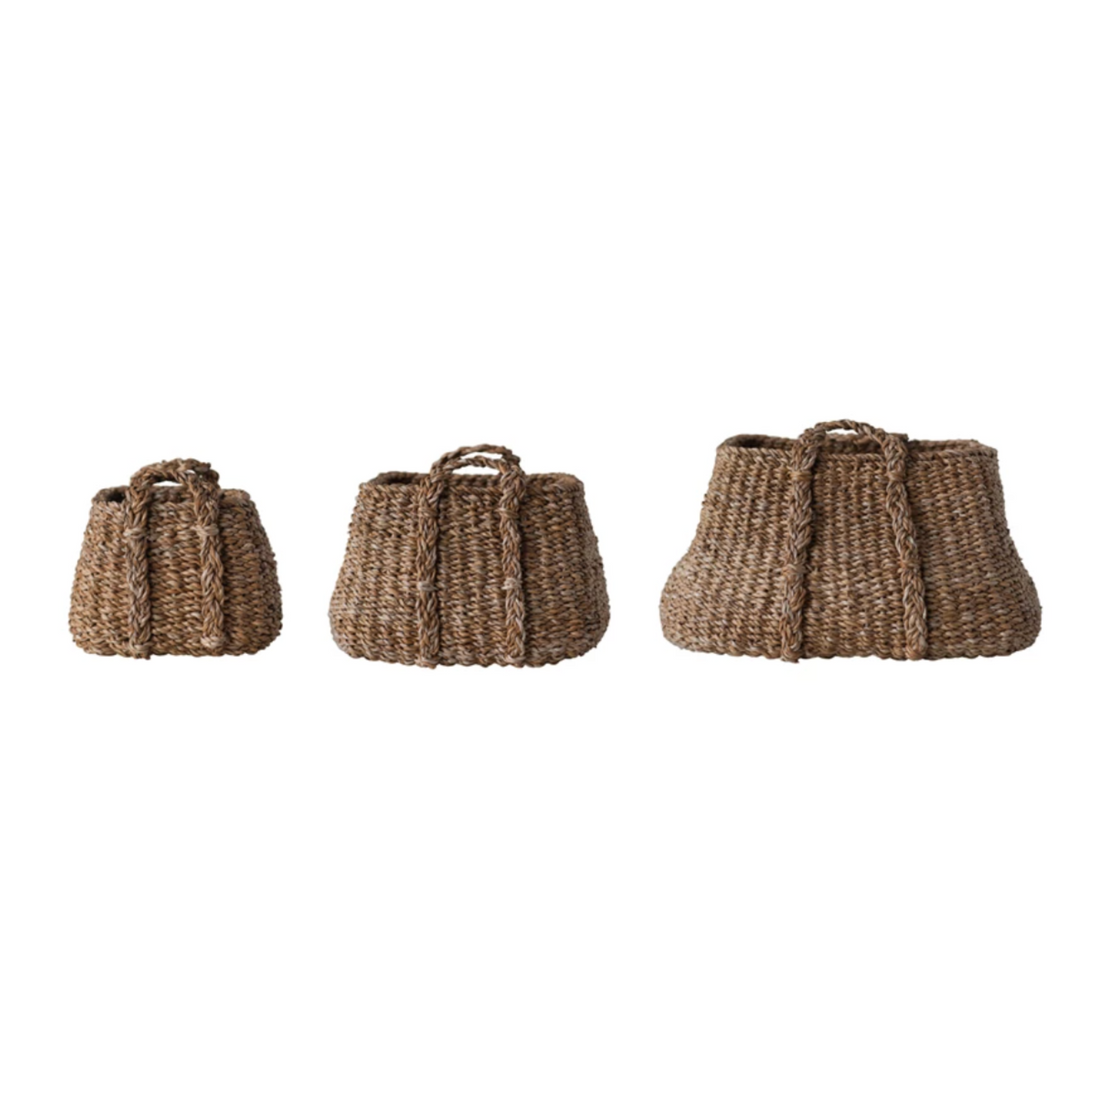 Woven Seagrass Basket w/ Handles